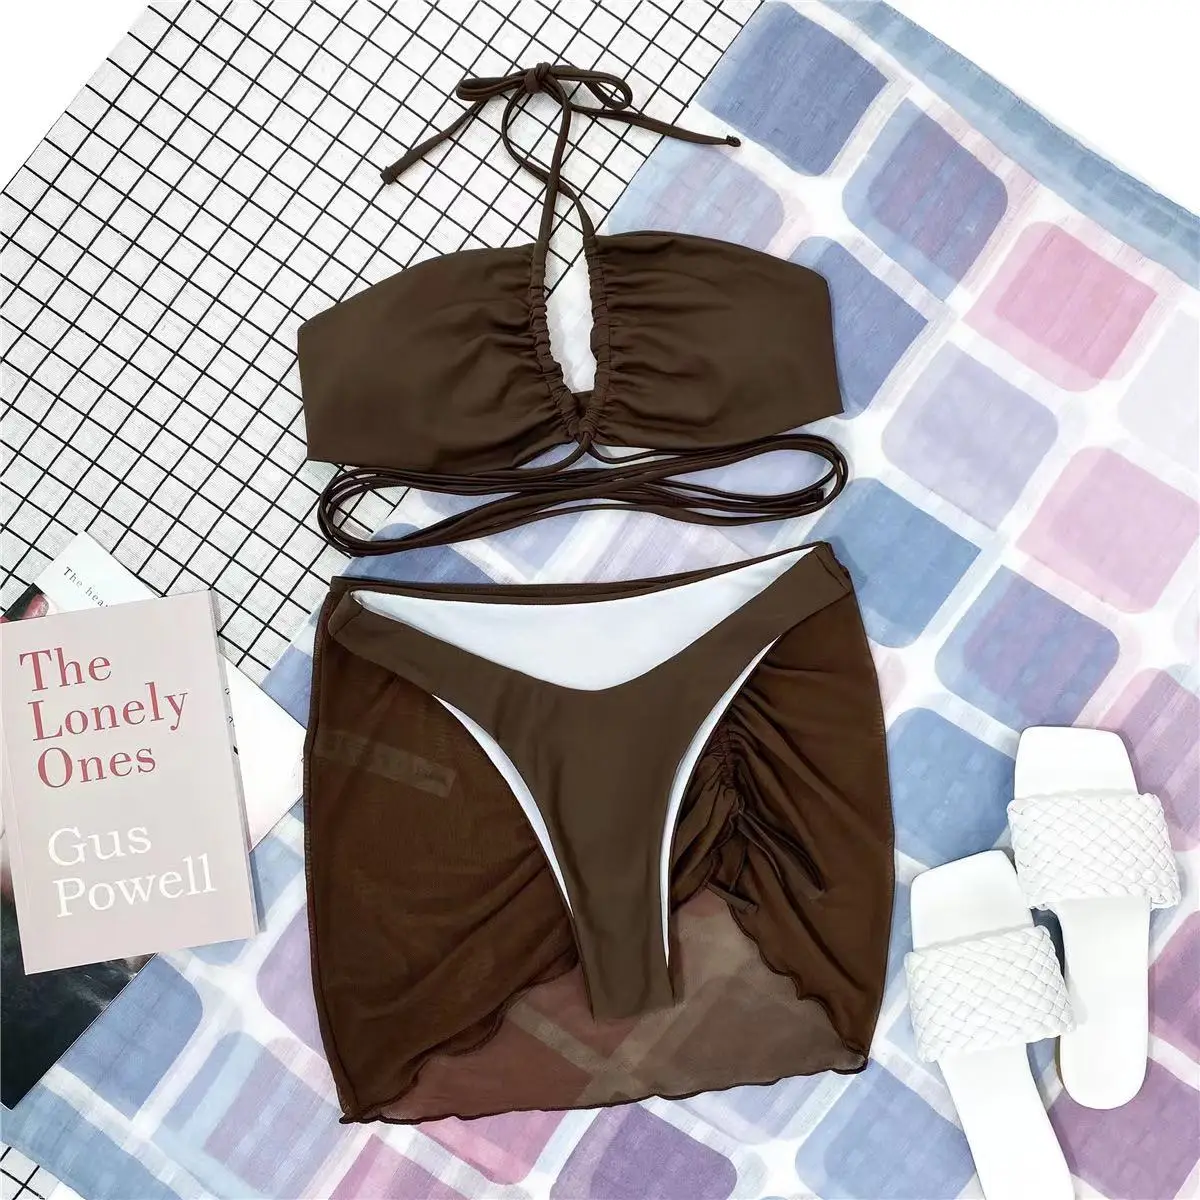 New 3 Pieces Set Swimsuit Women High Waist Swimwear Sexy Lace Up Micro Bikini Set With Skirt Solid Beachwear Bathing Suit